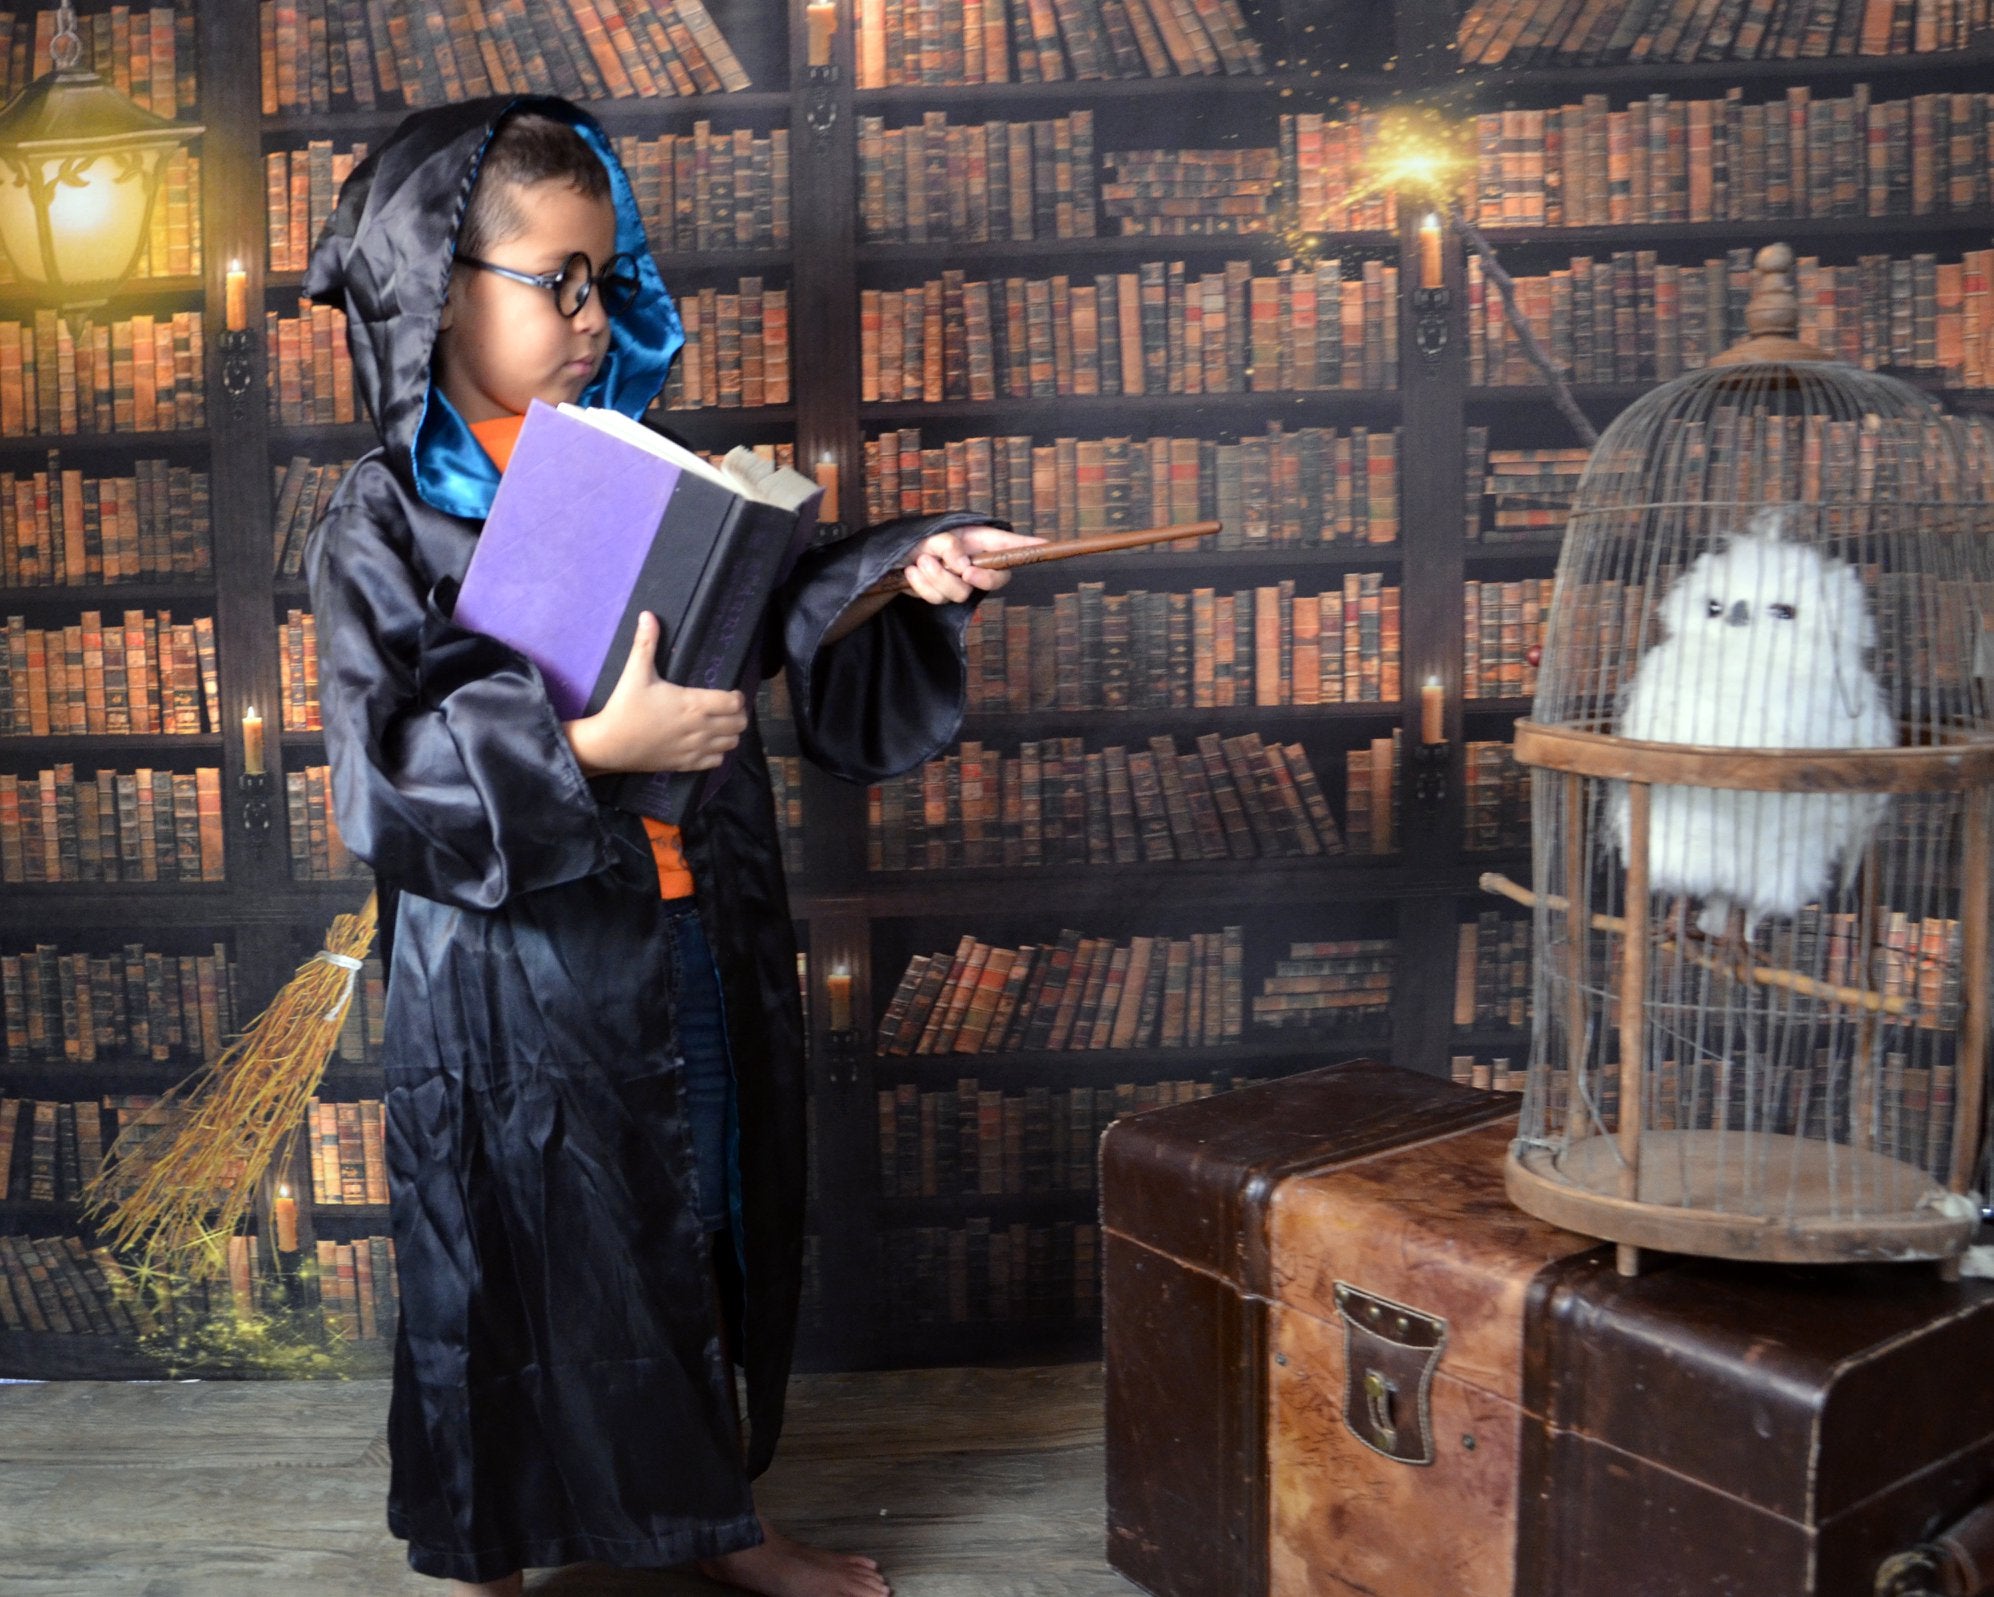 Kate Library Bookshelf Back To School Backdrop Designed By JS Photography